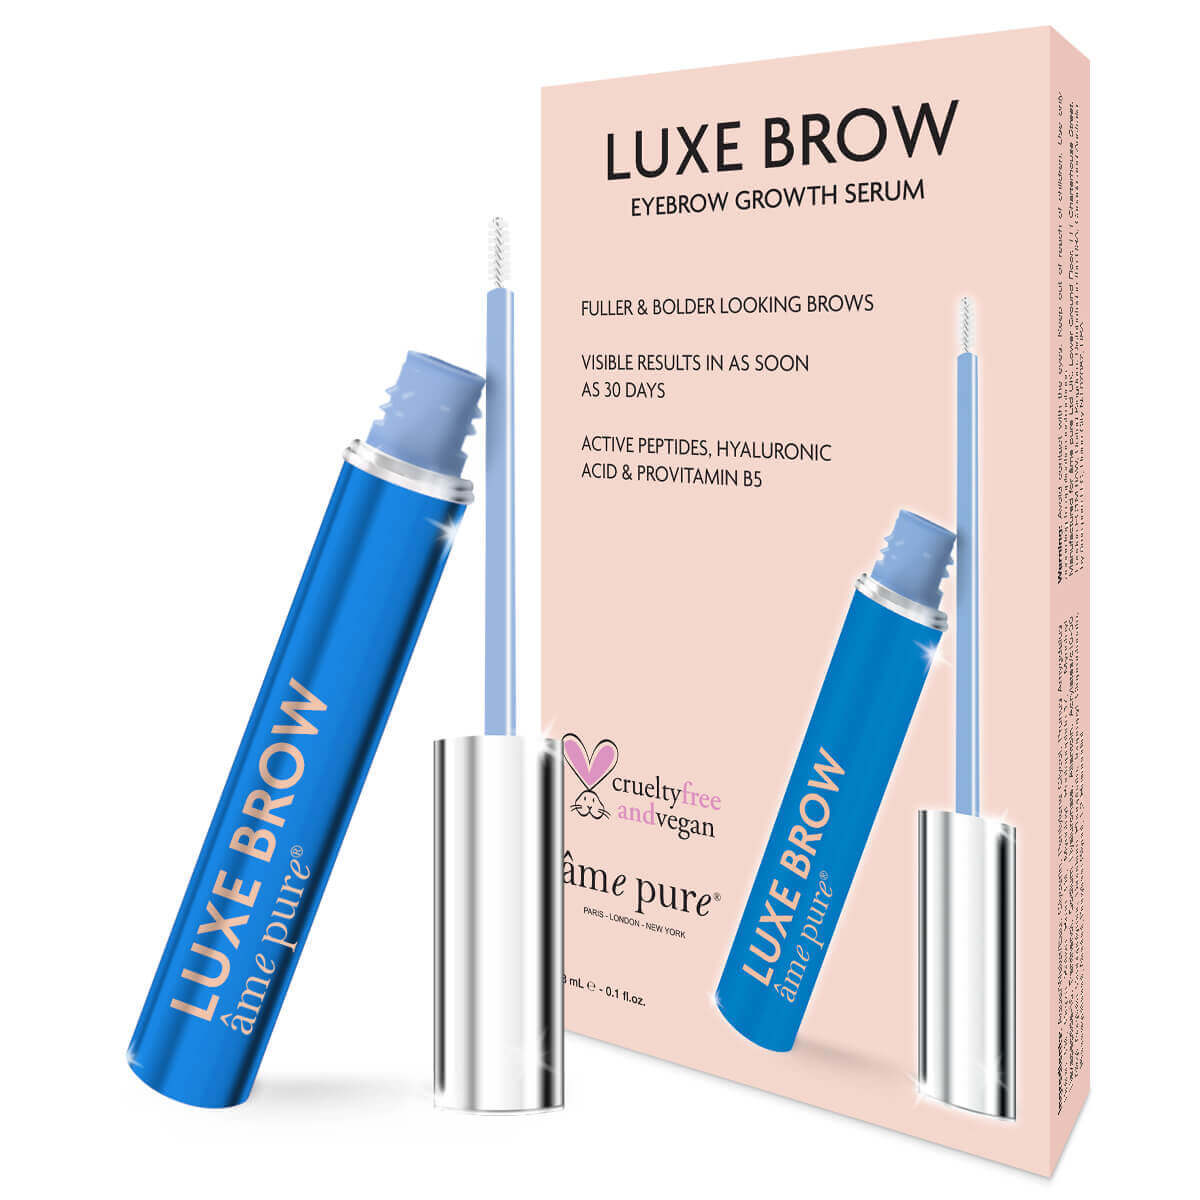 LUXE BROW | Eyebrow Growth Serum